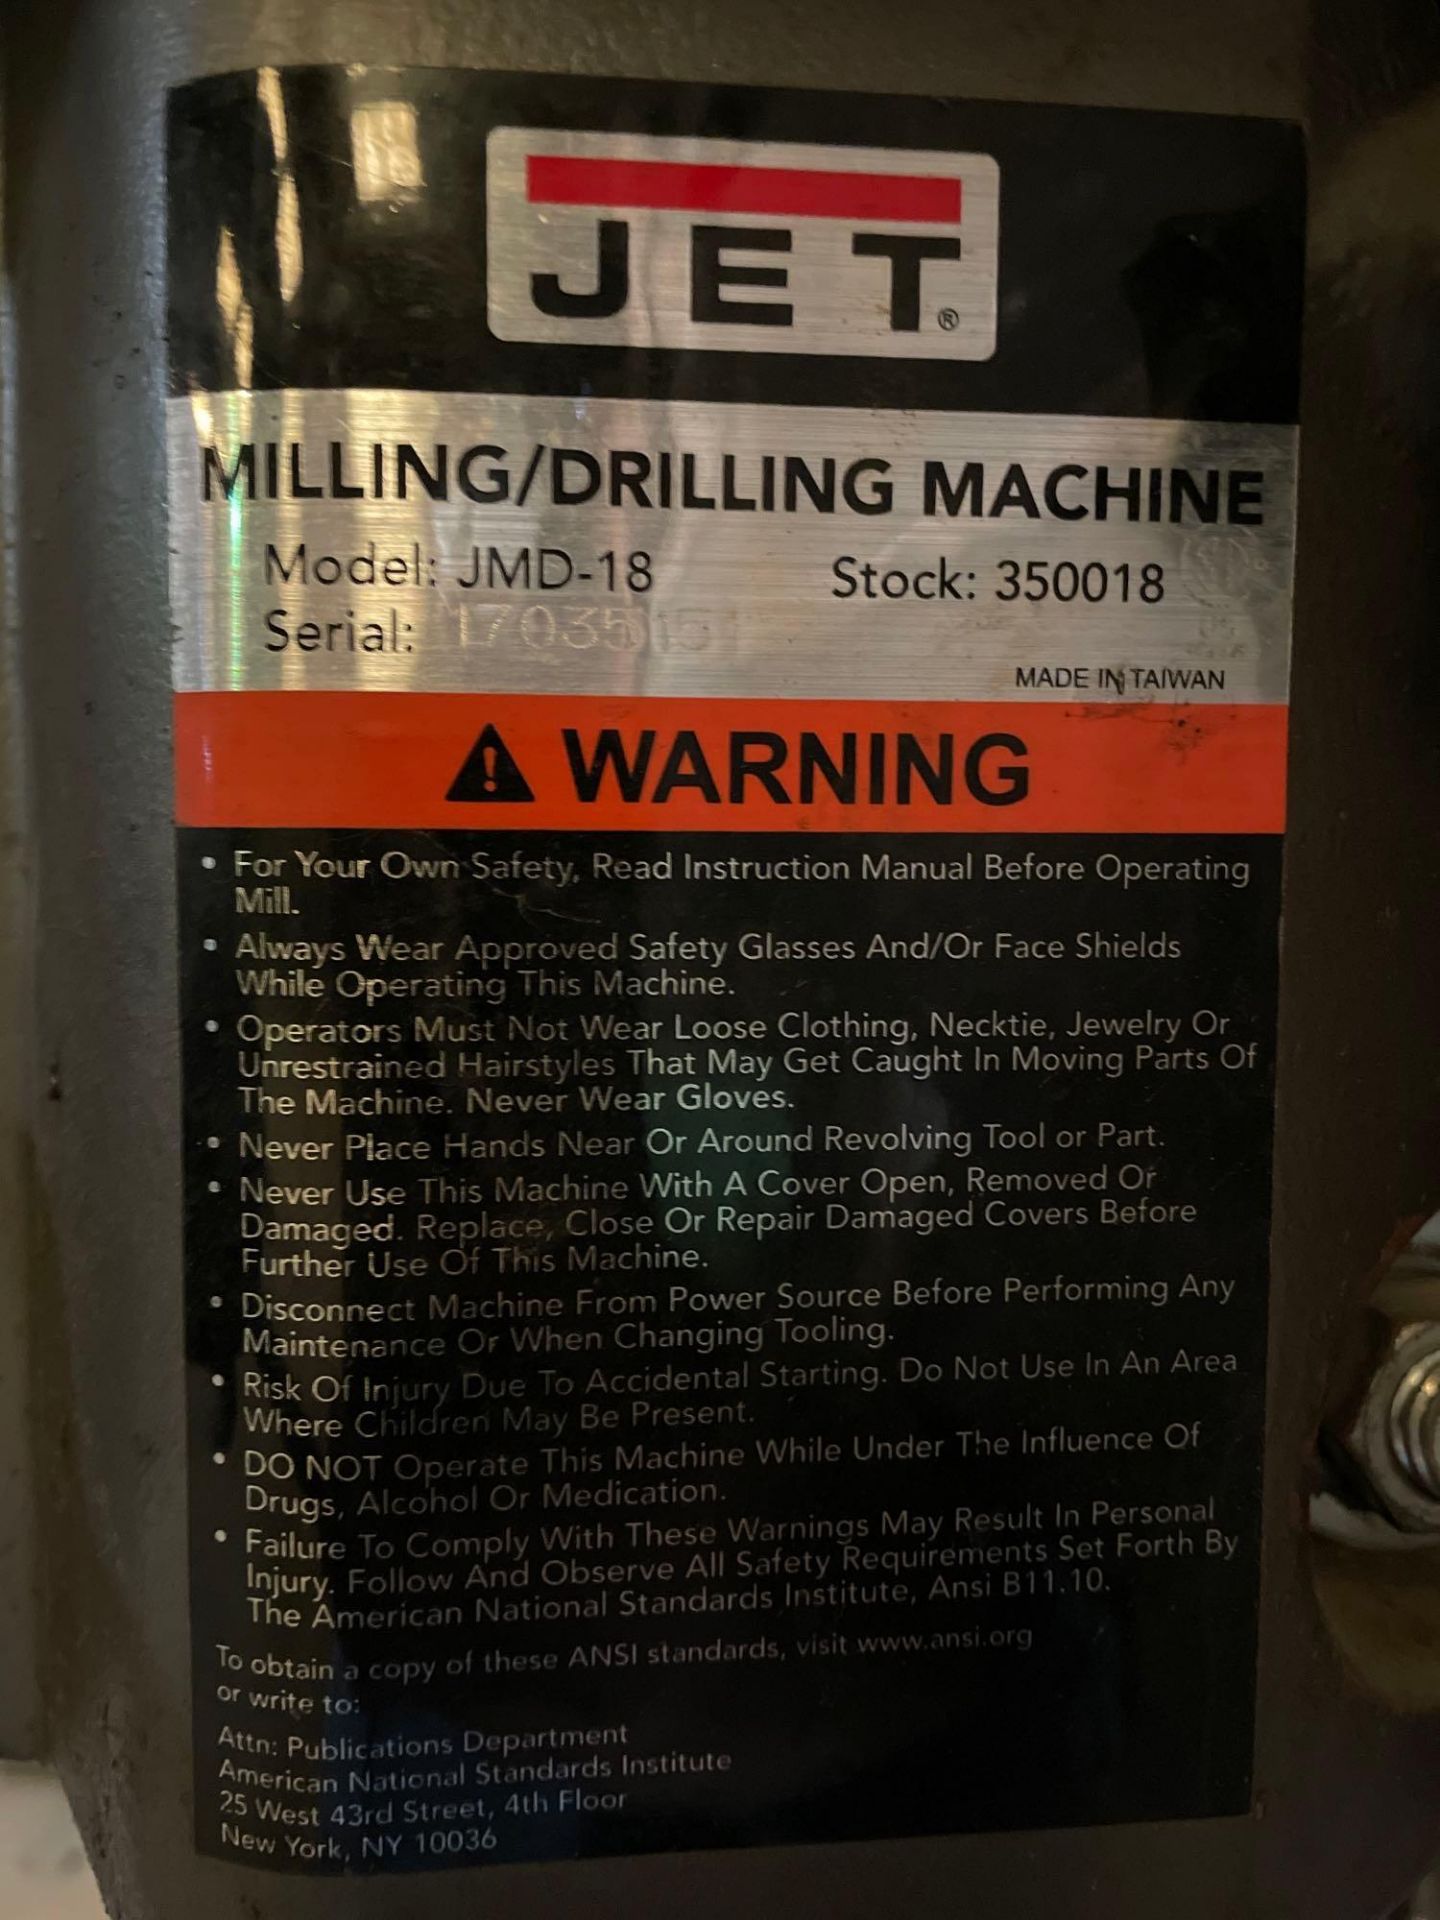 Jet Milling / Drilling Machine Model JMD-18, S/N 17035151 - Image 9 of 9